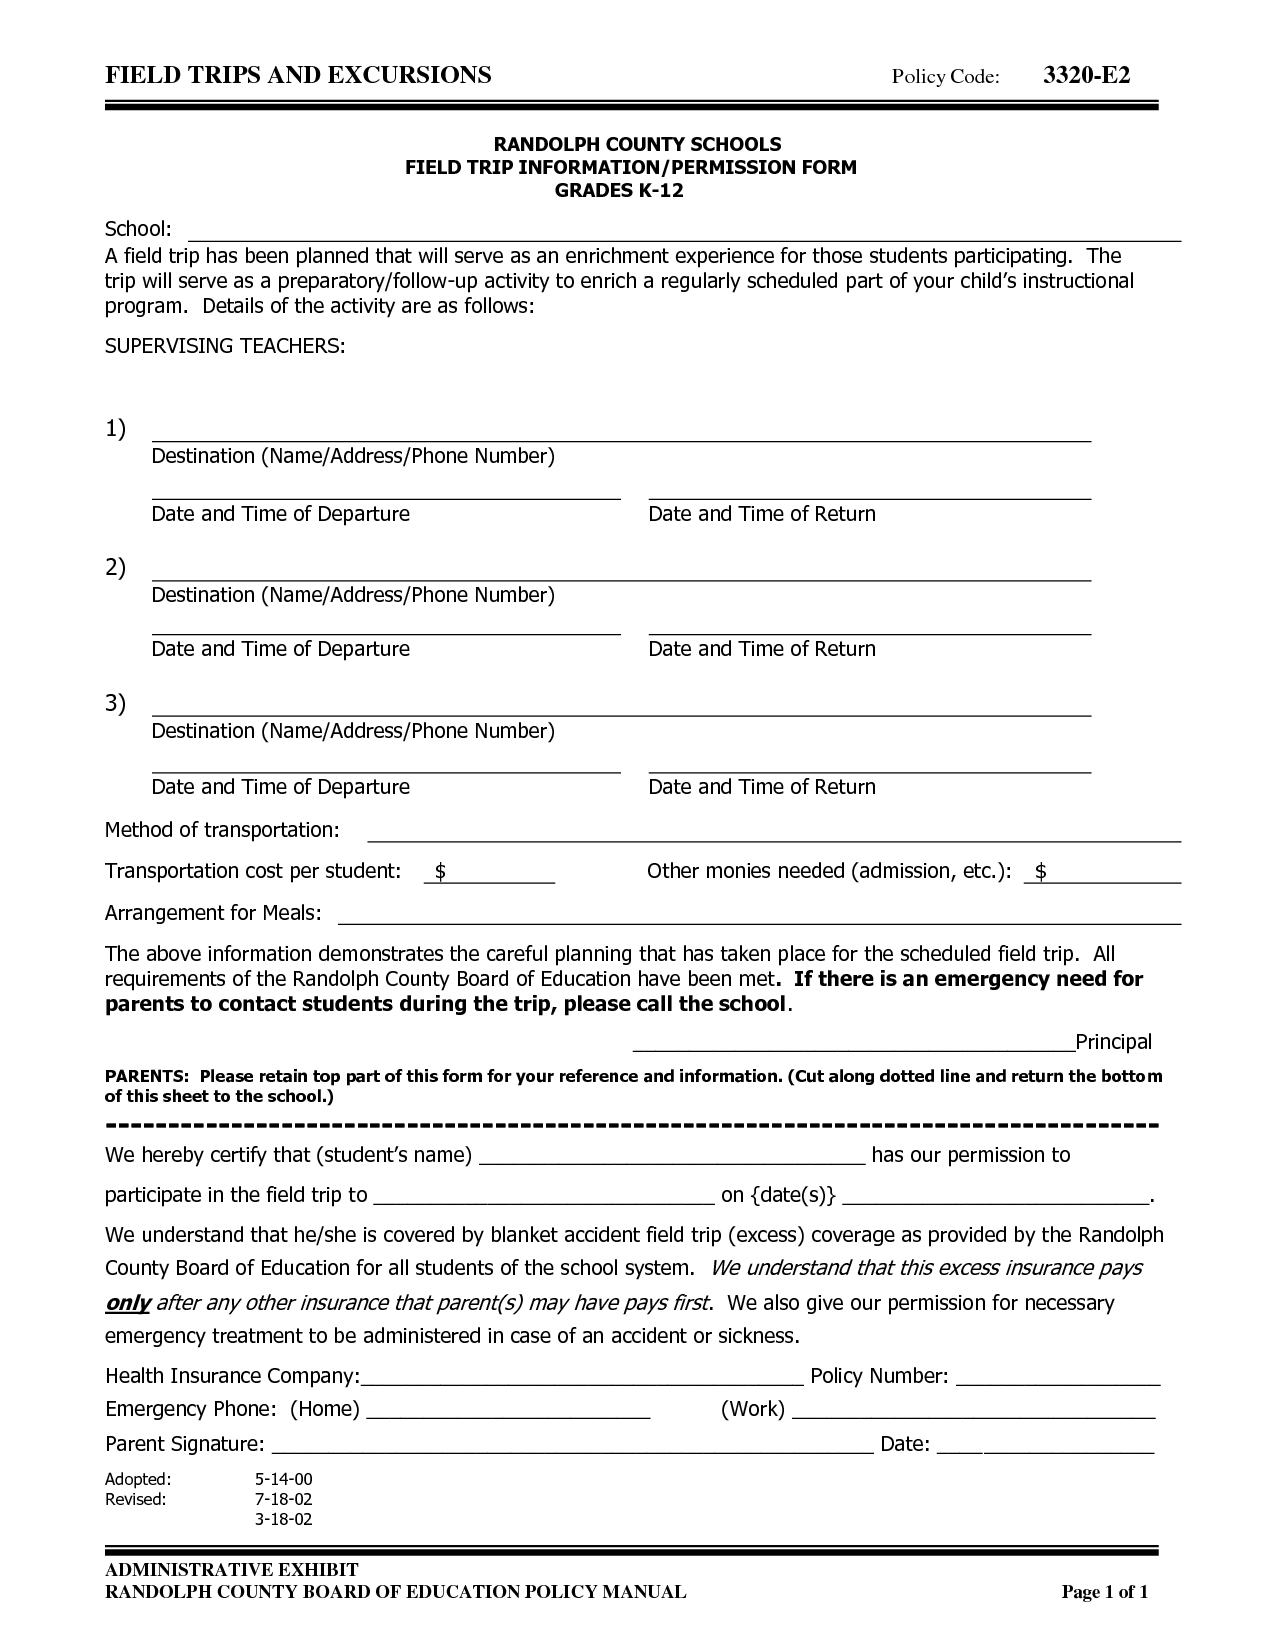 School Field Trip Permission Form